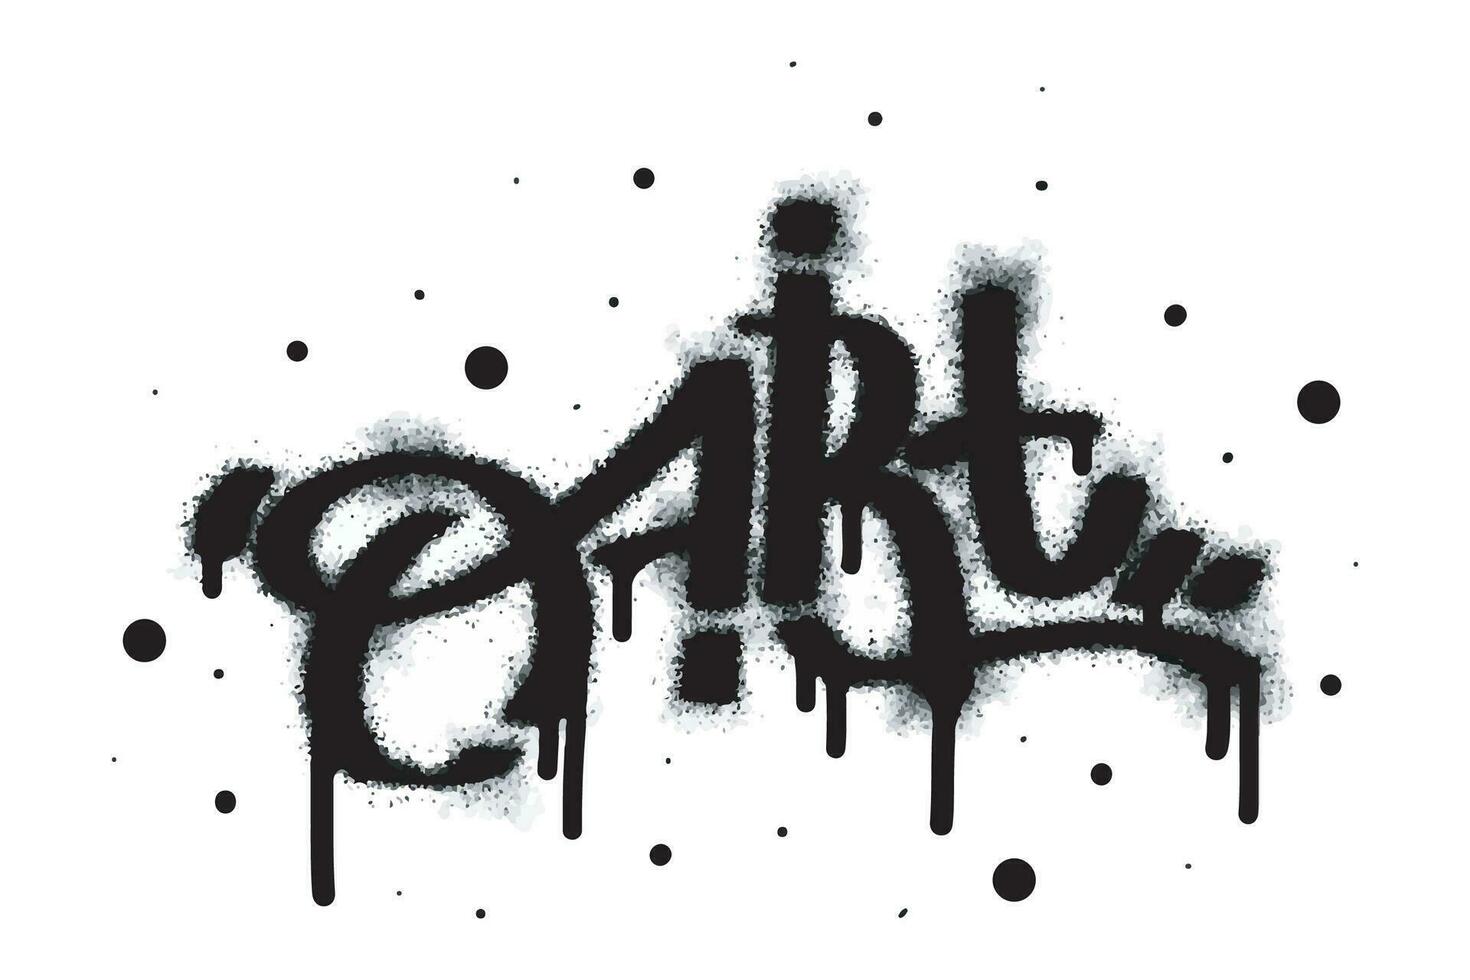 graffiti kunst woord en symbool gespoten in zwart vector